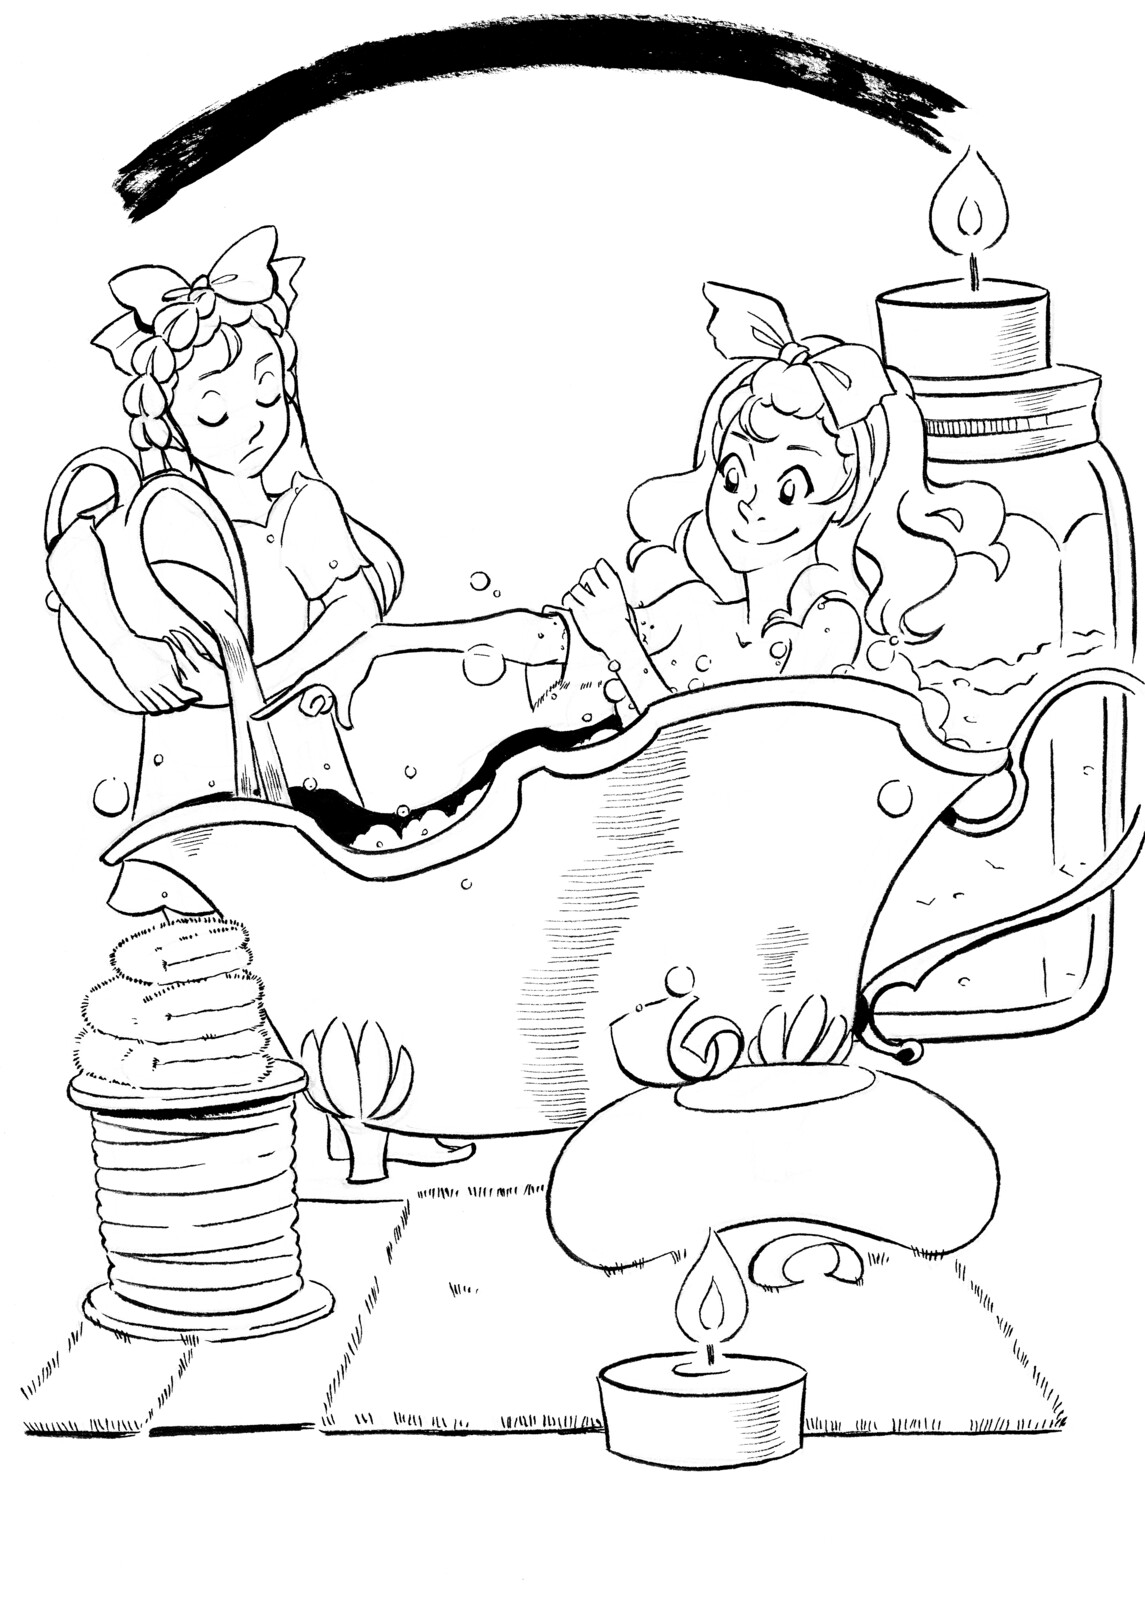 Inked illustration from Lilliputian Living Volume 4 of a Lilliputian enjoying a bath in a silver gravy boat.